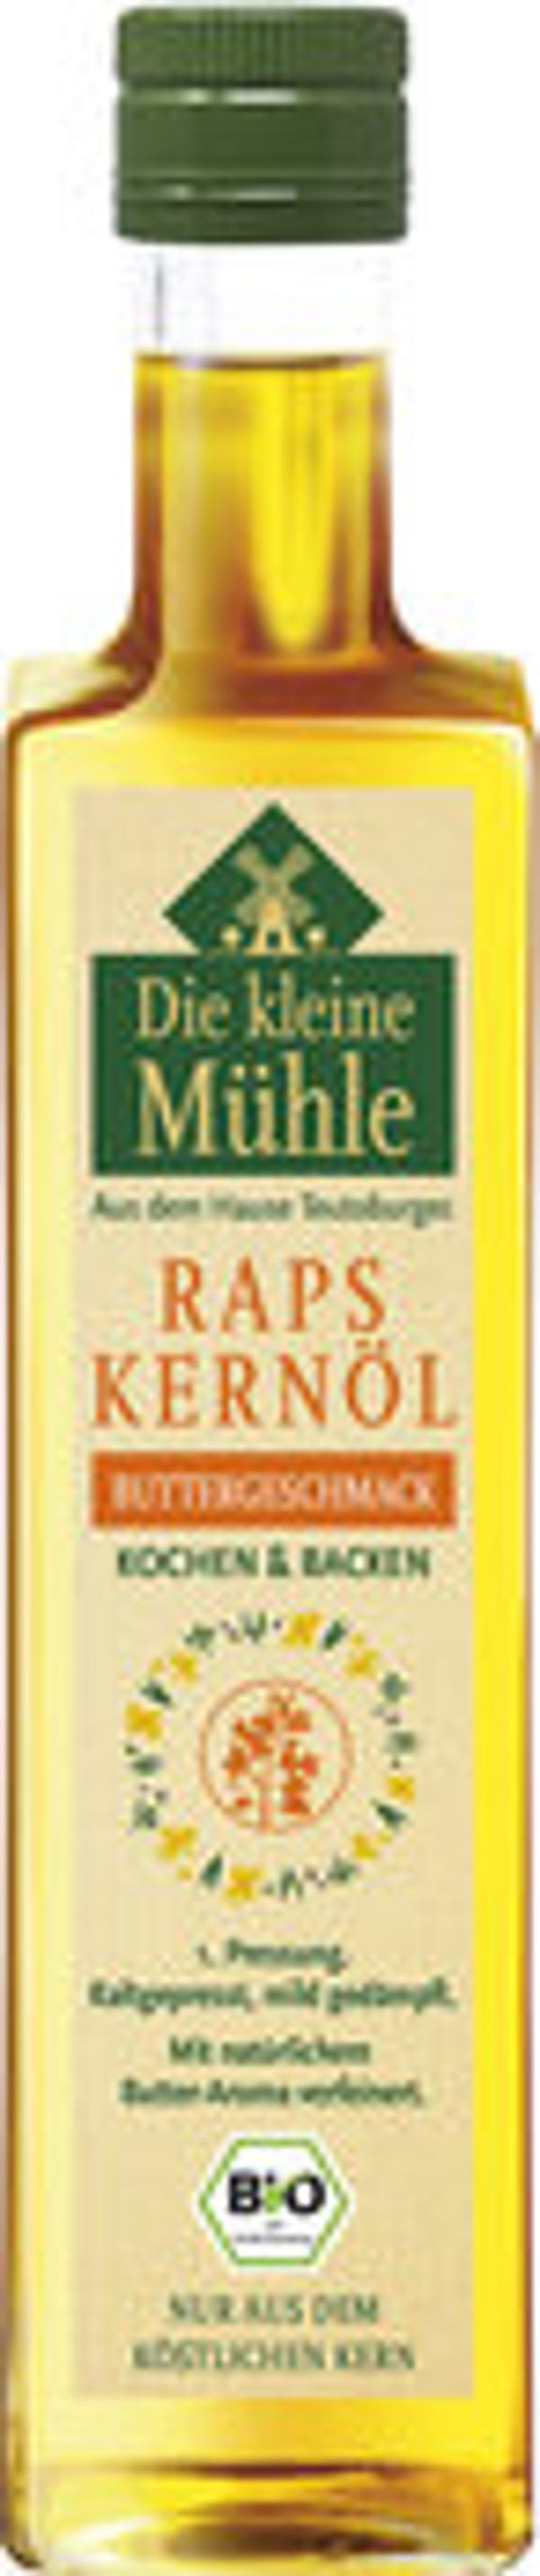 Produktfoto zu Raps Kernöl Buttergeschmack, 500 ml